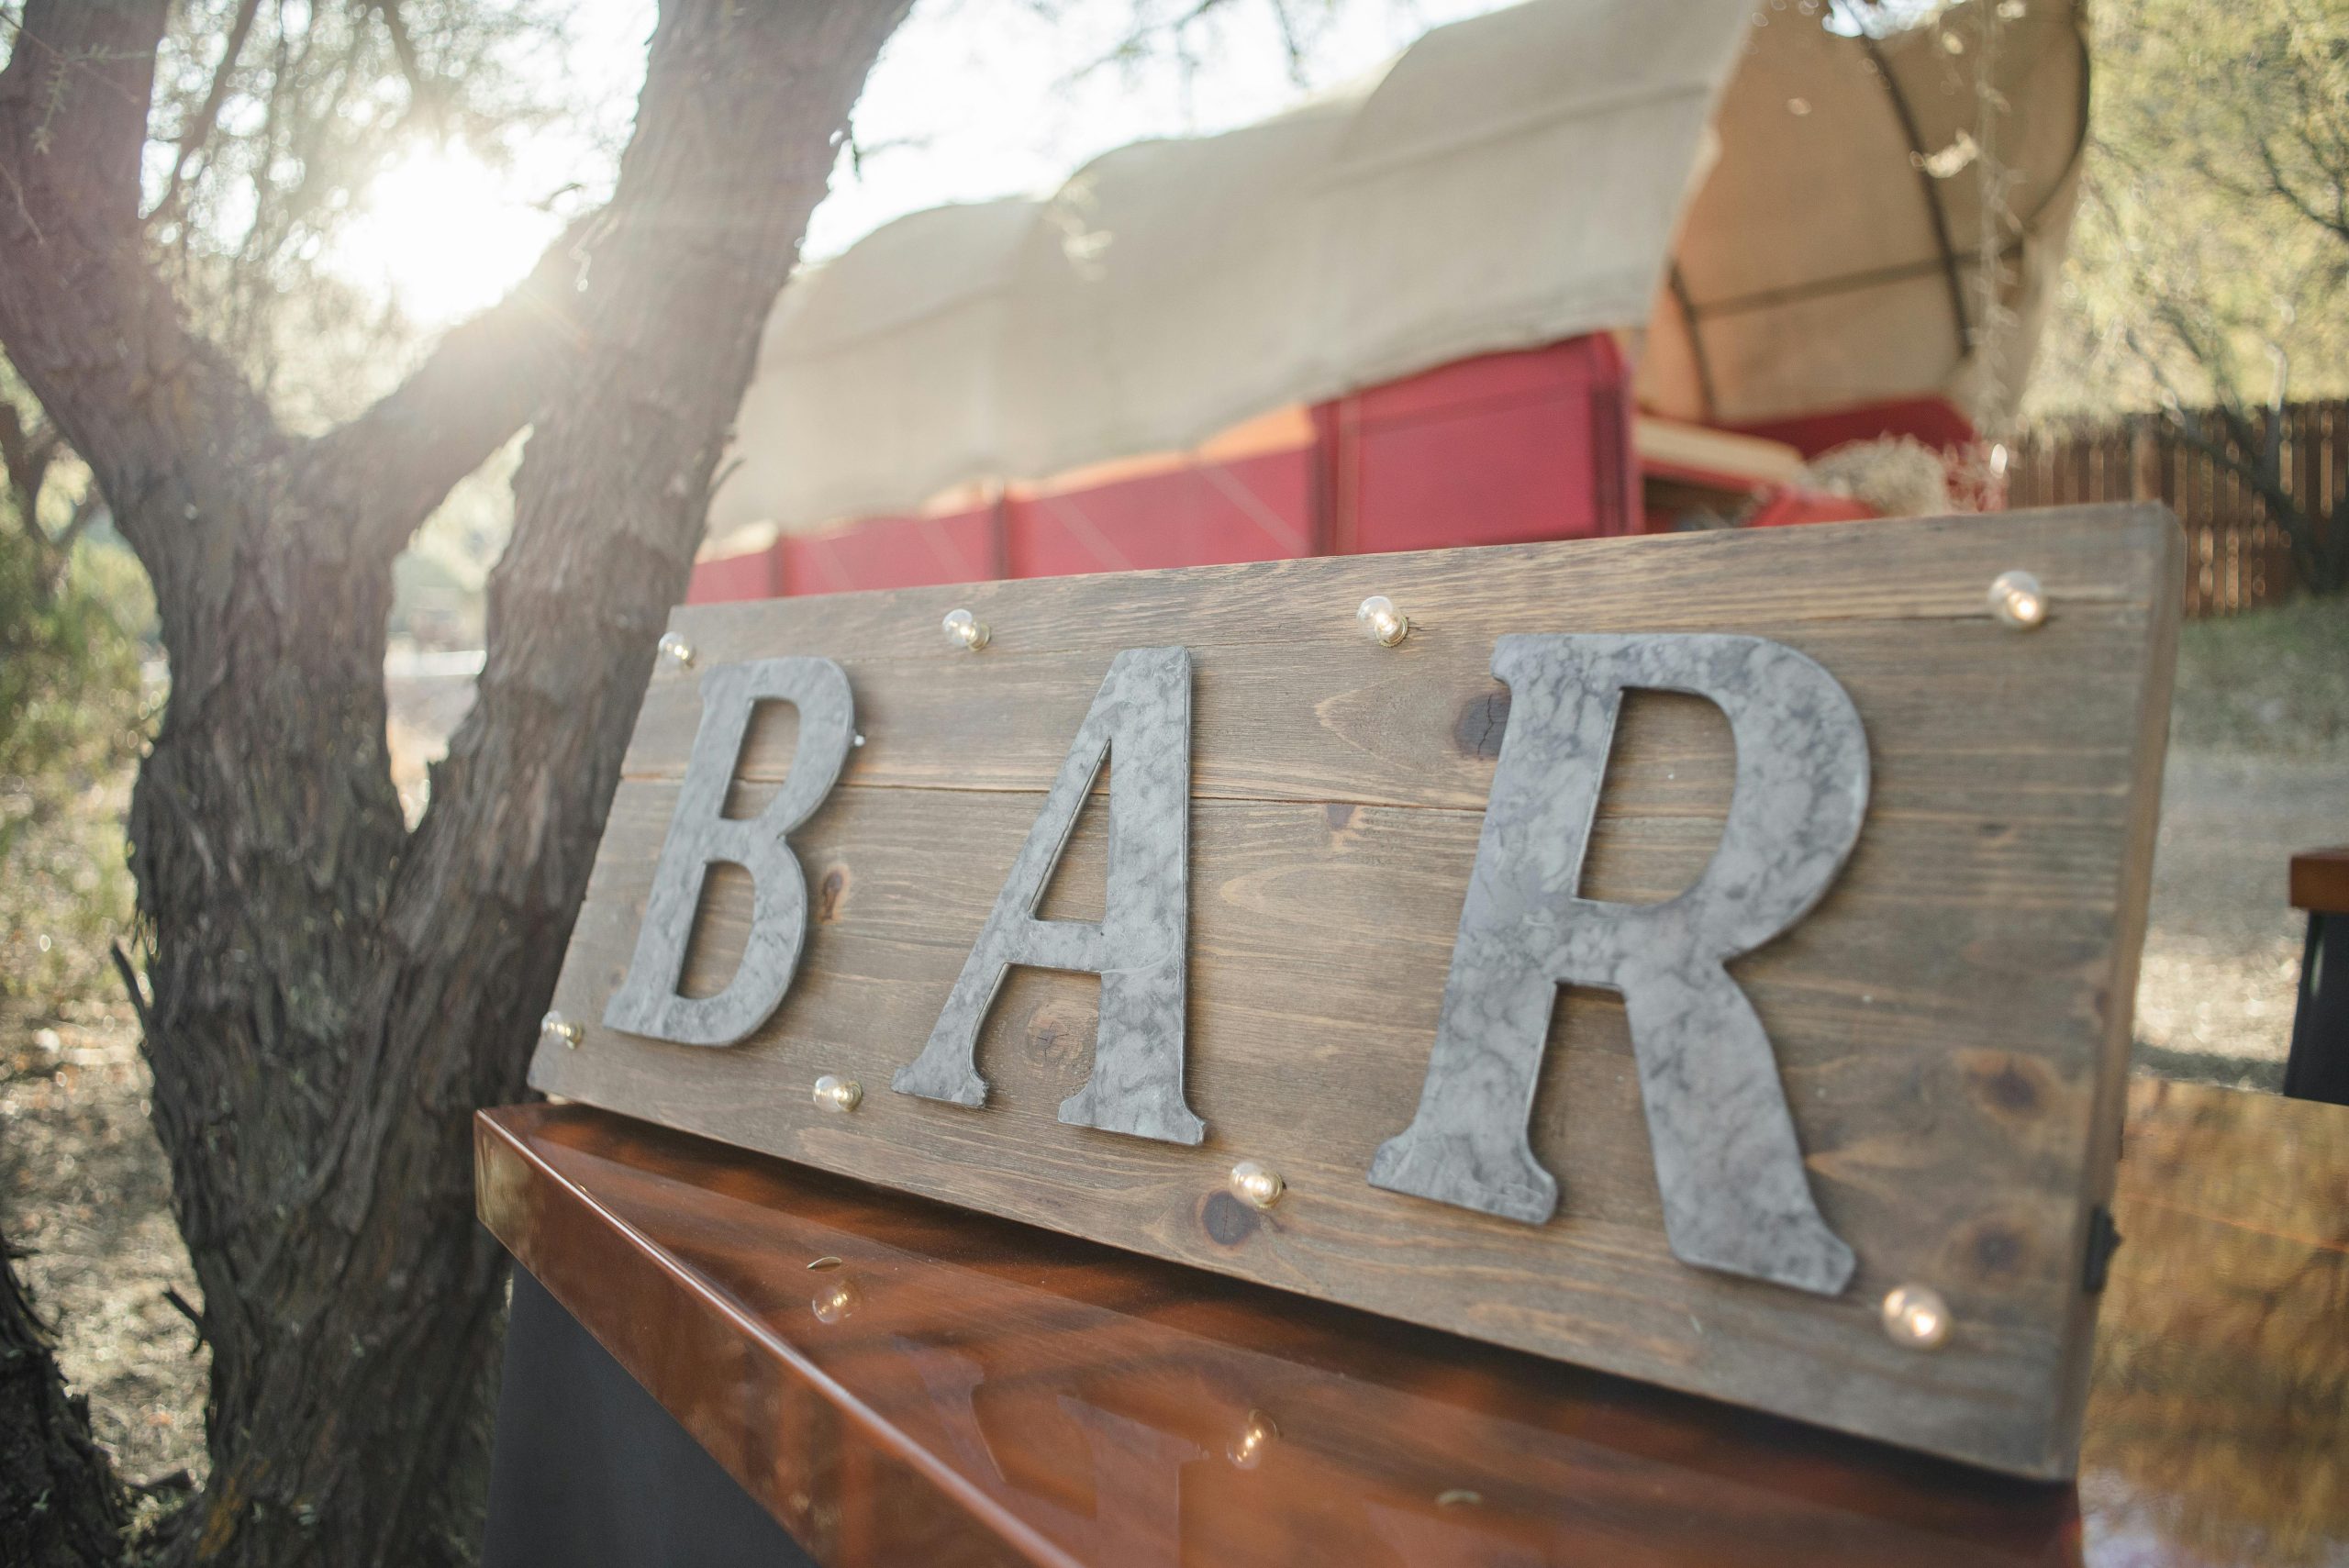 Design Considerations for Backyard Bars